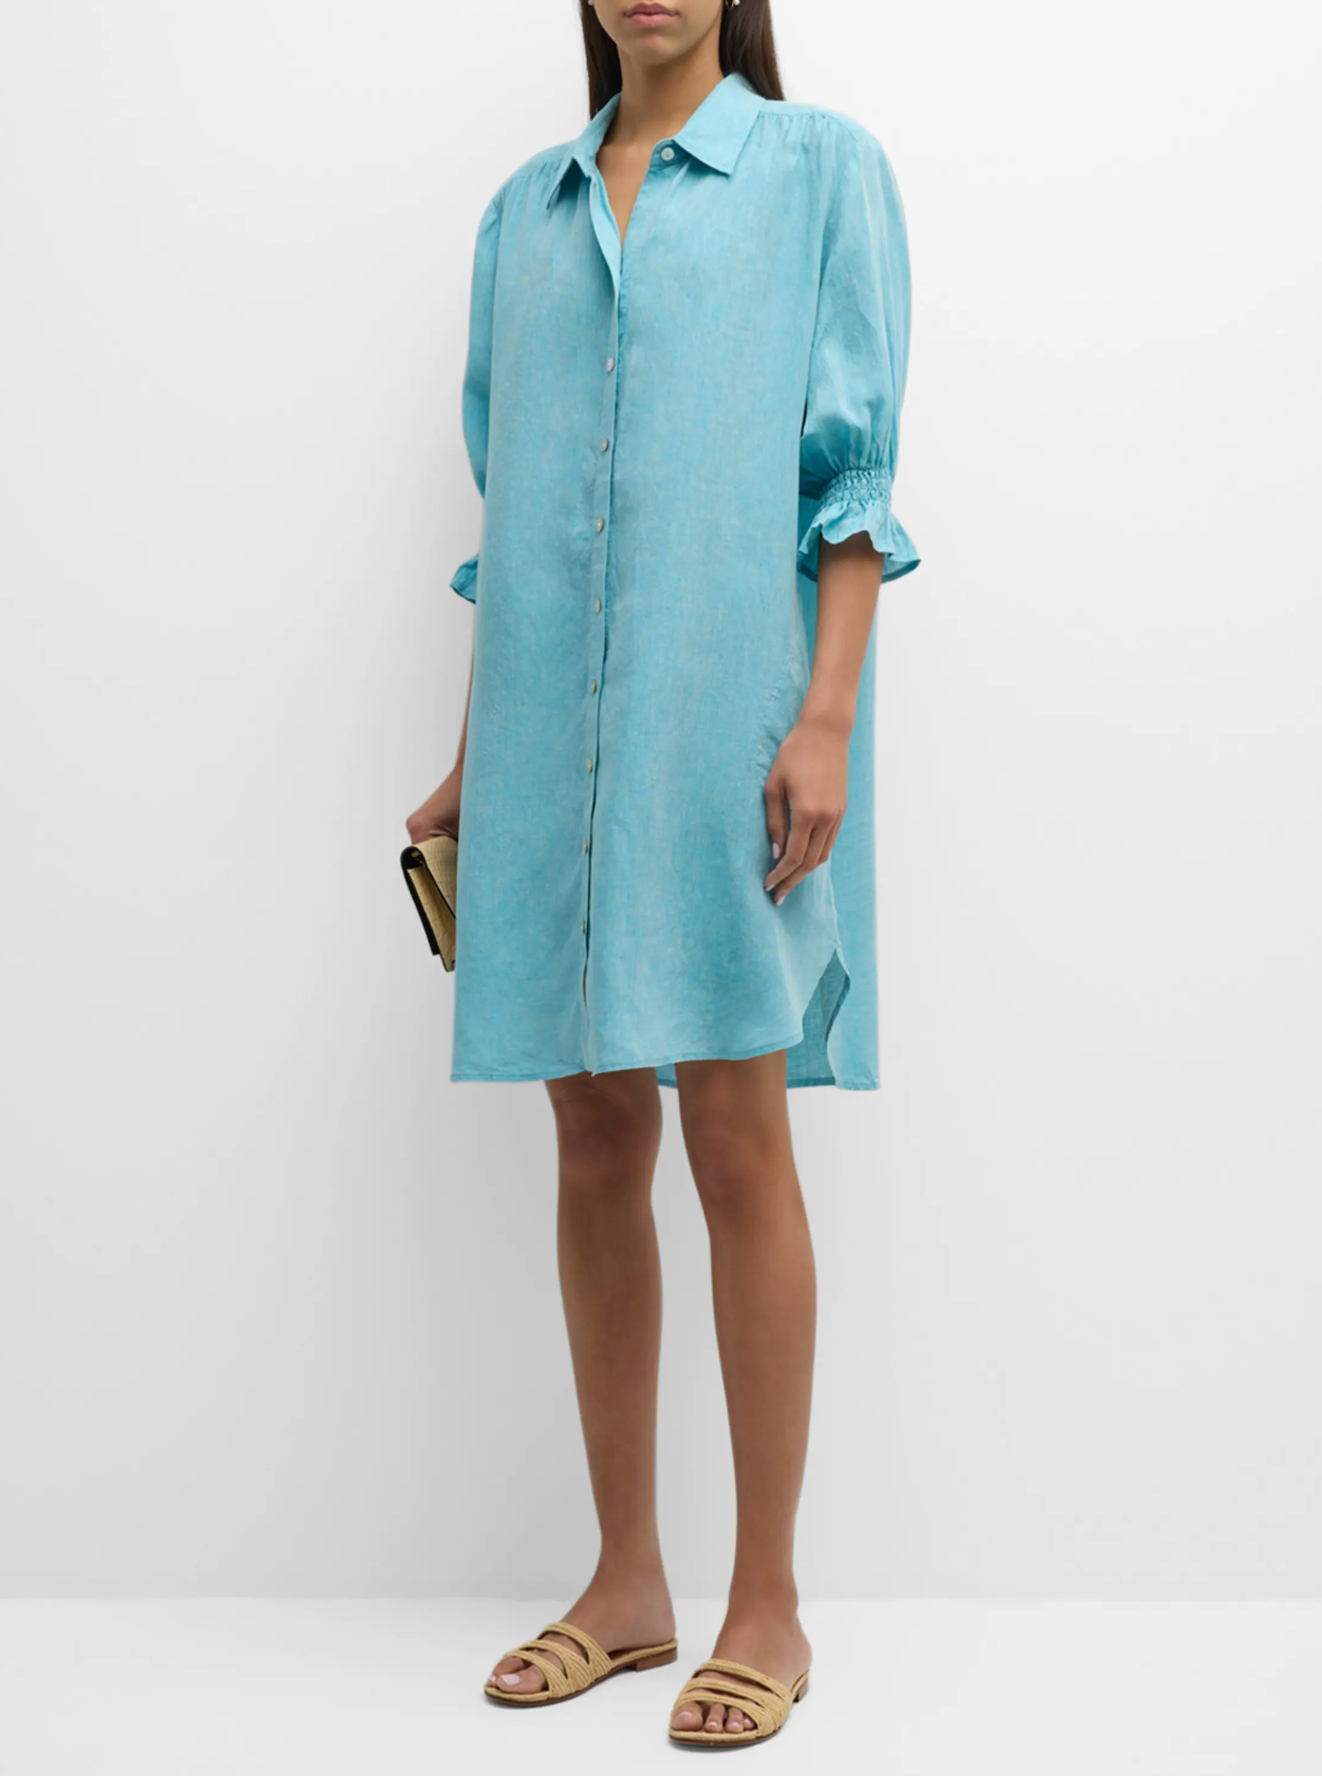 Miller Dress in Caribbean Blue Linen - The French Shoppe